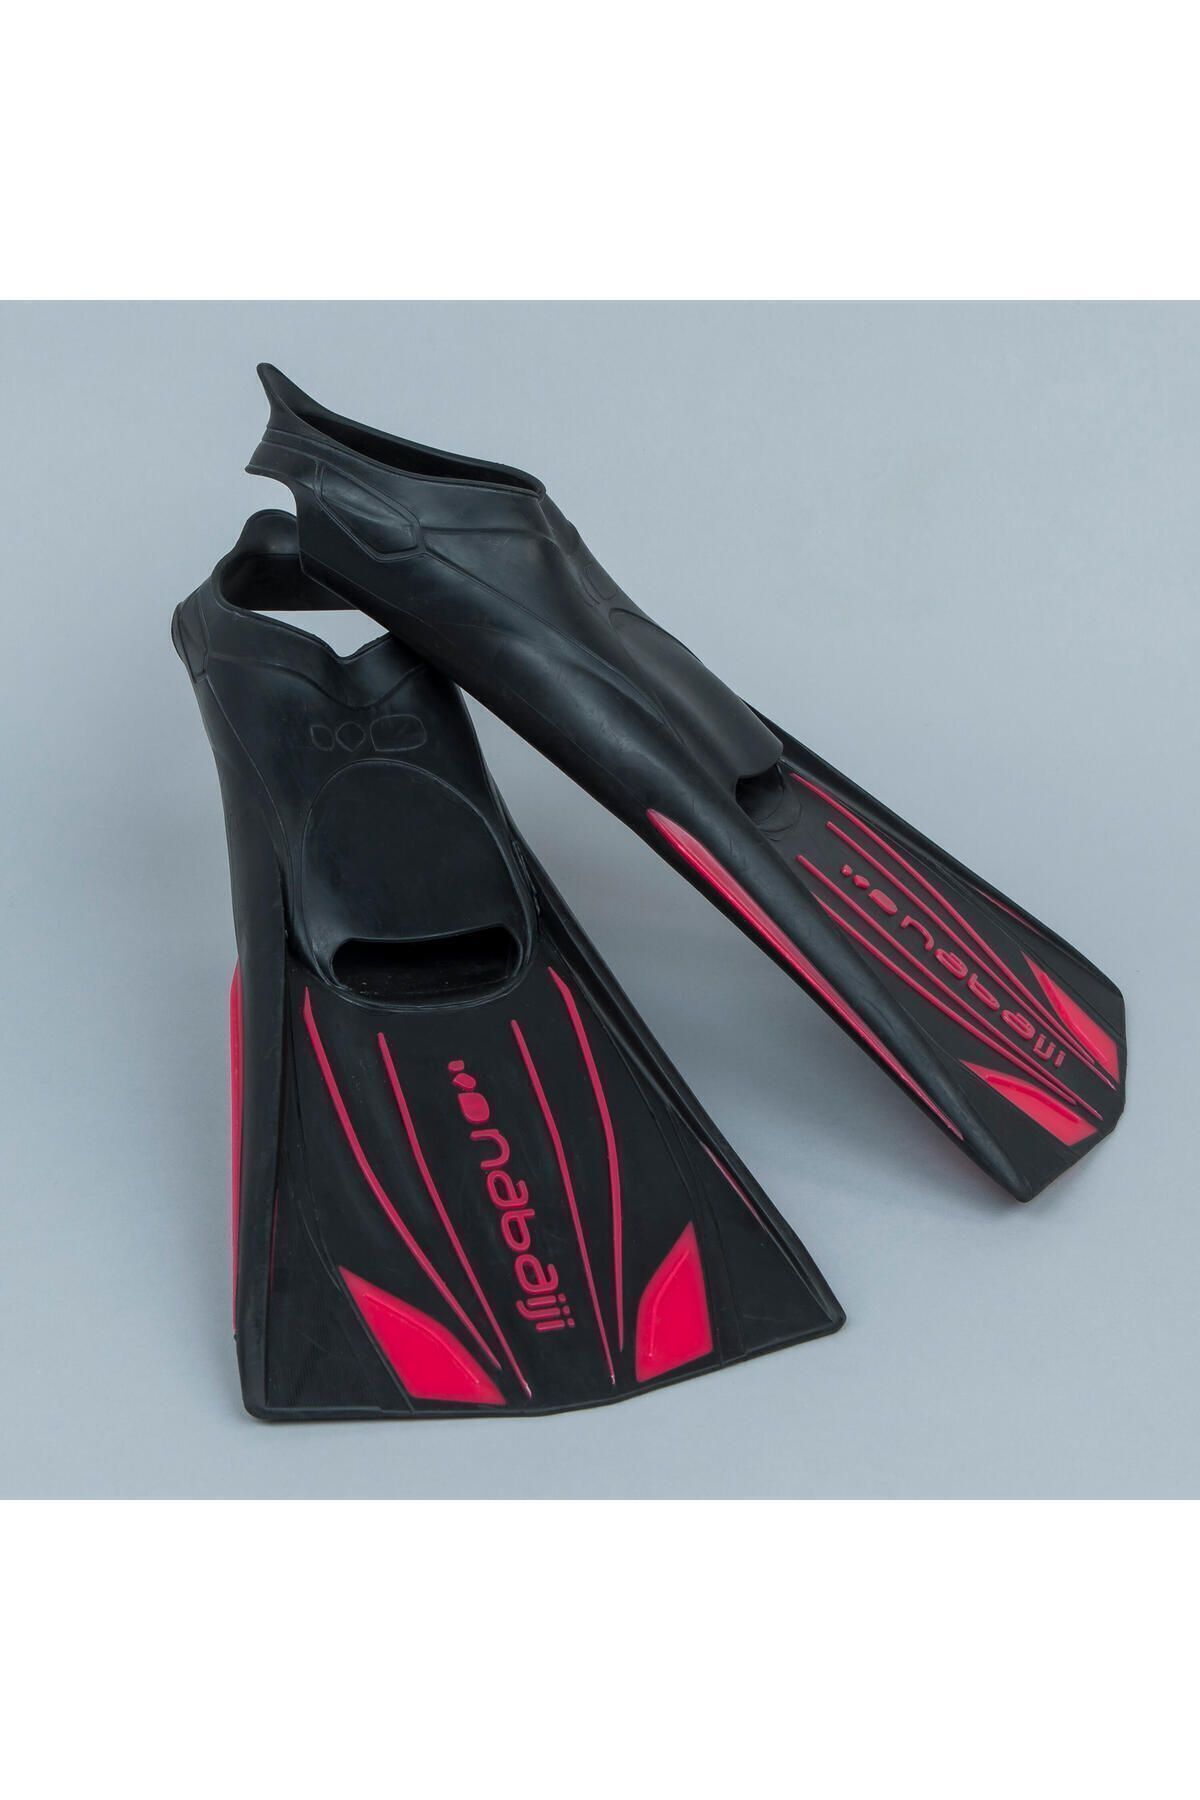 Decathlon Nabaiji Sert Uzun Palet - Siyah / Kırmızı - Topfins 900